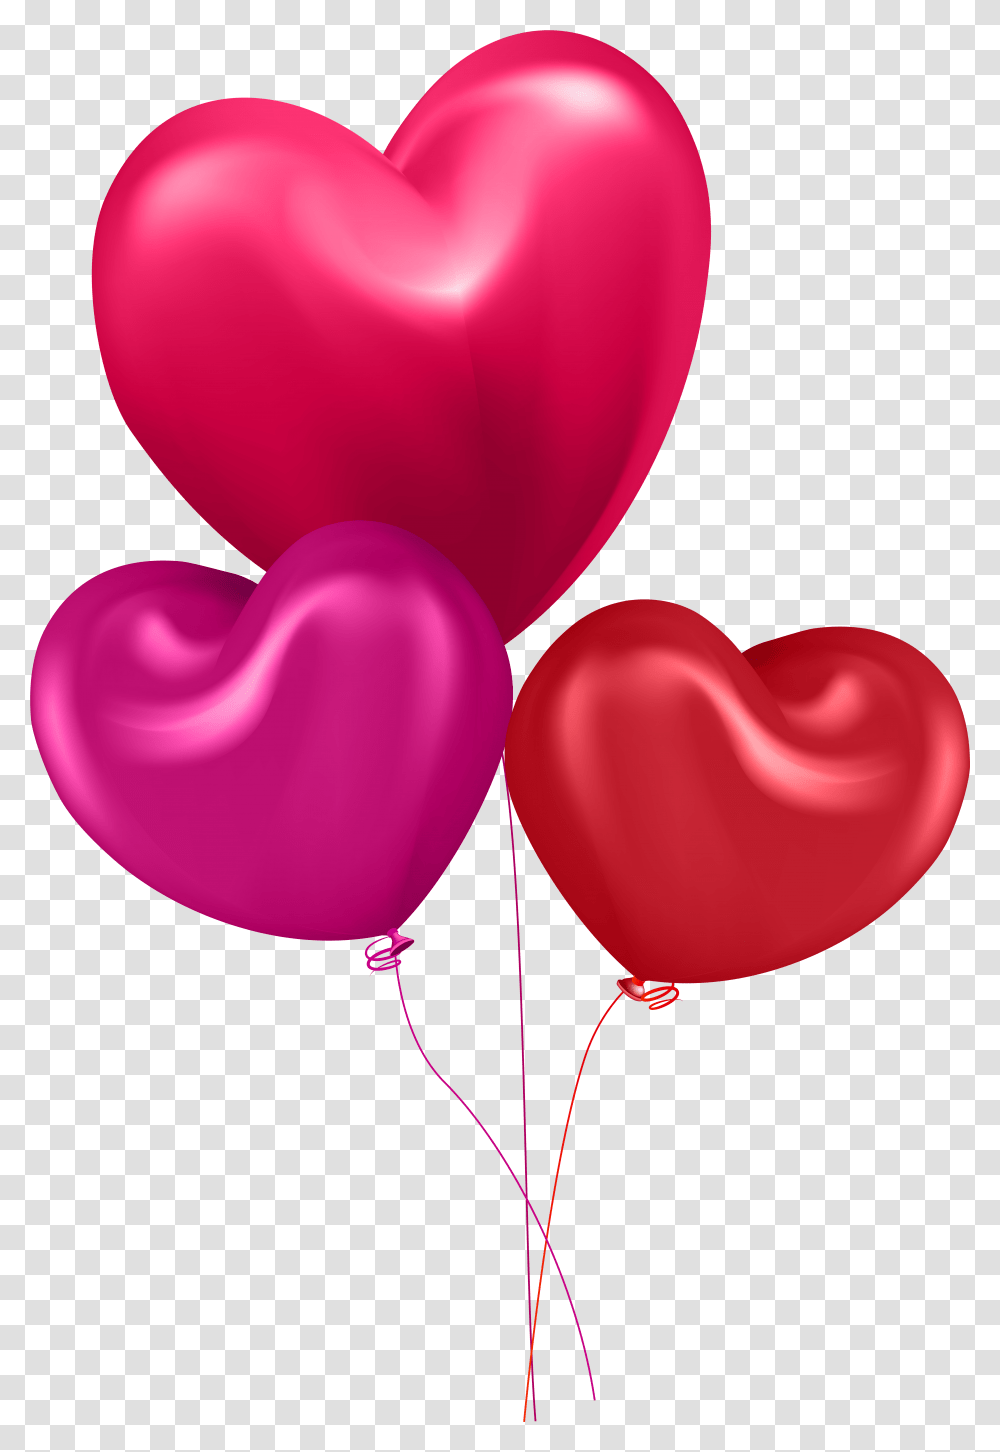 Heart Balloon Clipart Hearts Balloon Heart Balloons Heart Balloons Background Transparent Png